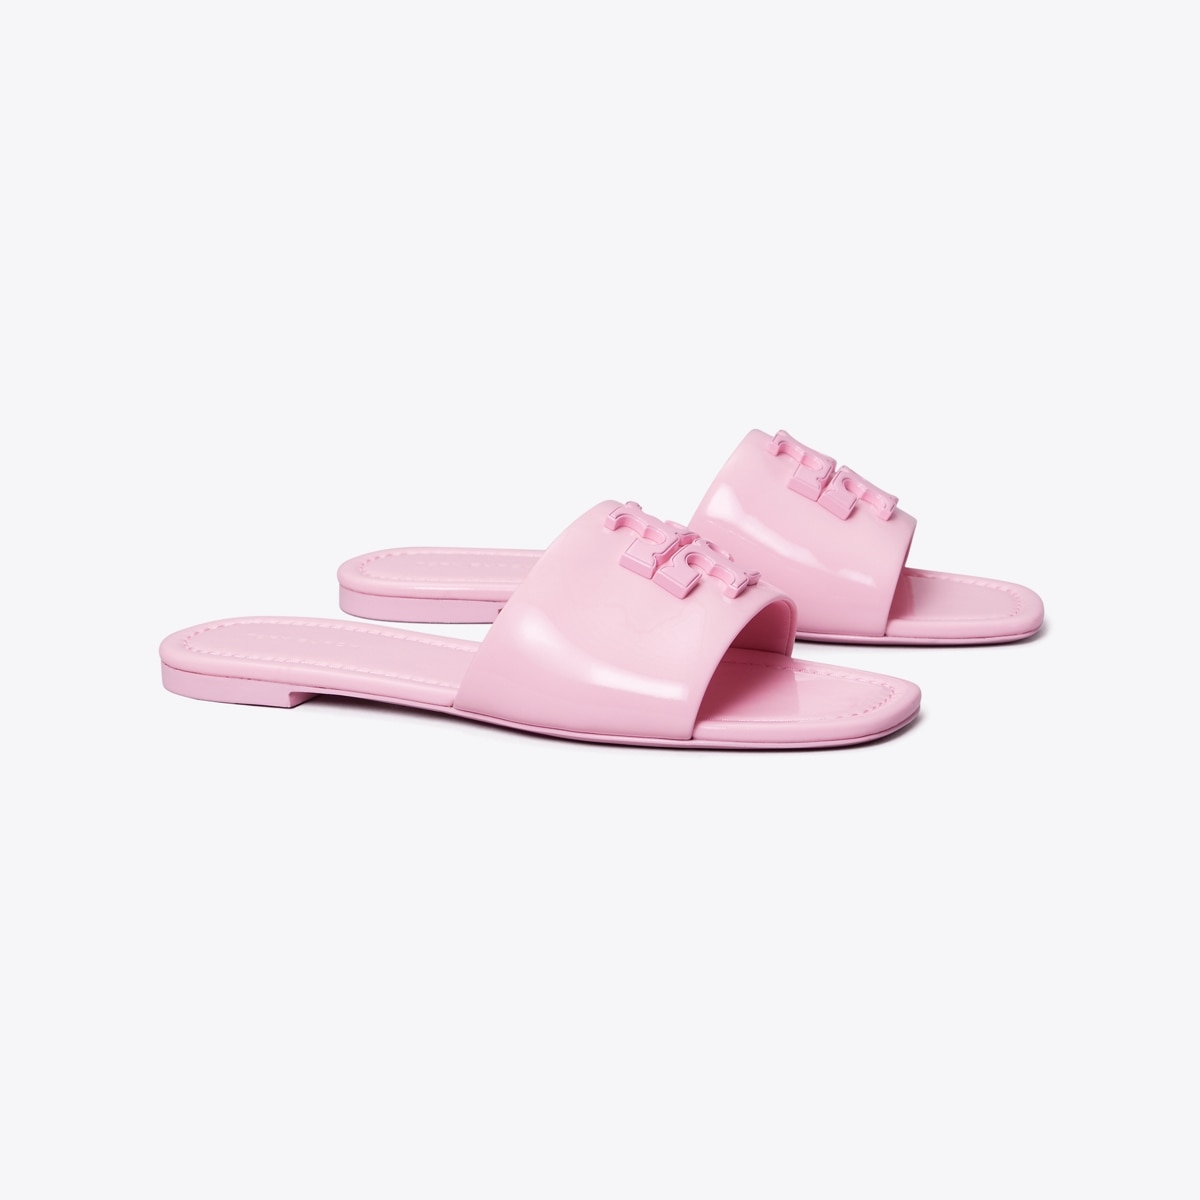 Eleanor Slide: Women's Designer Sandals